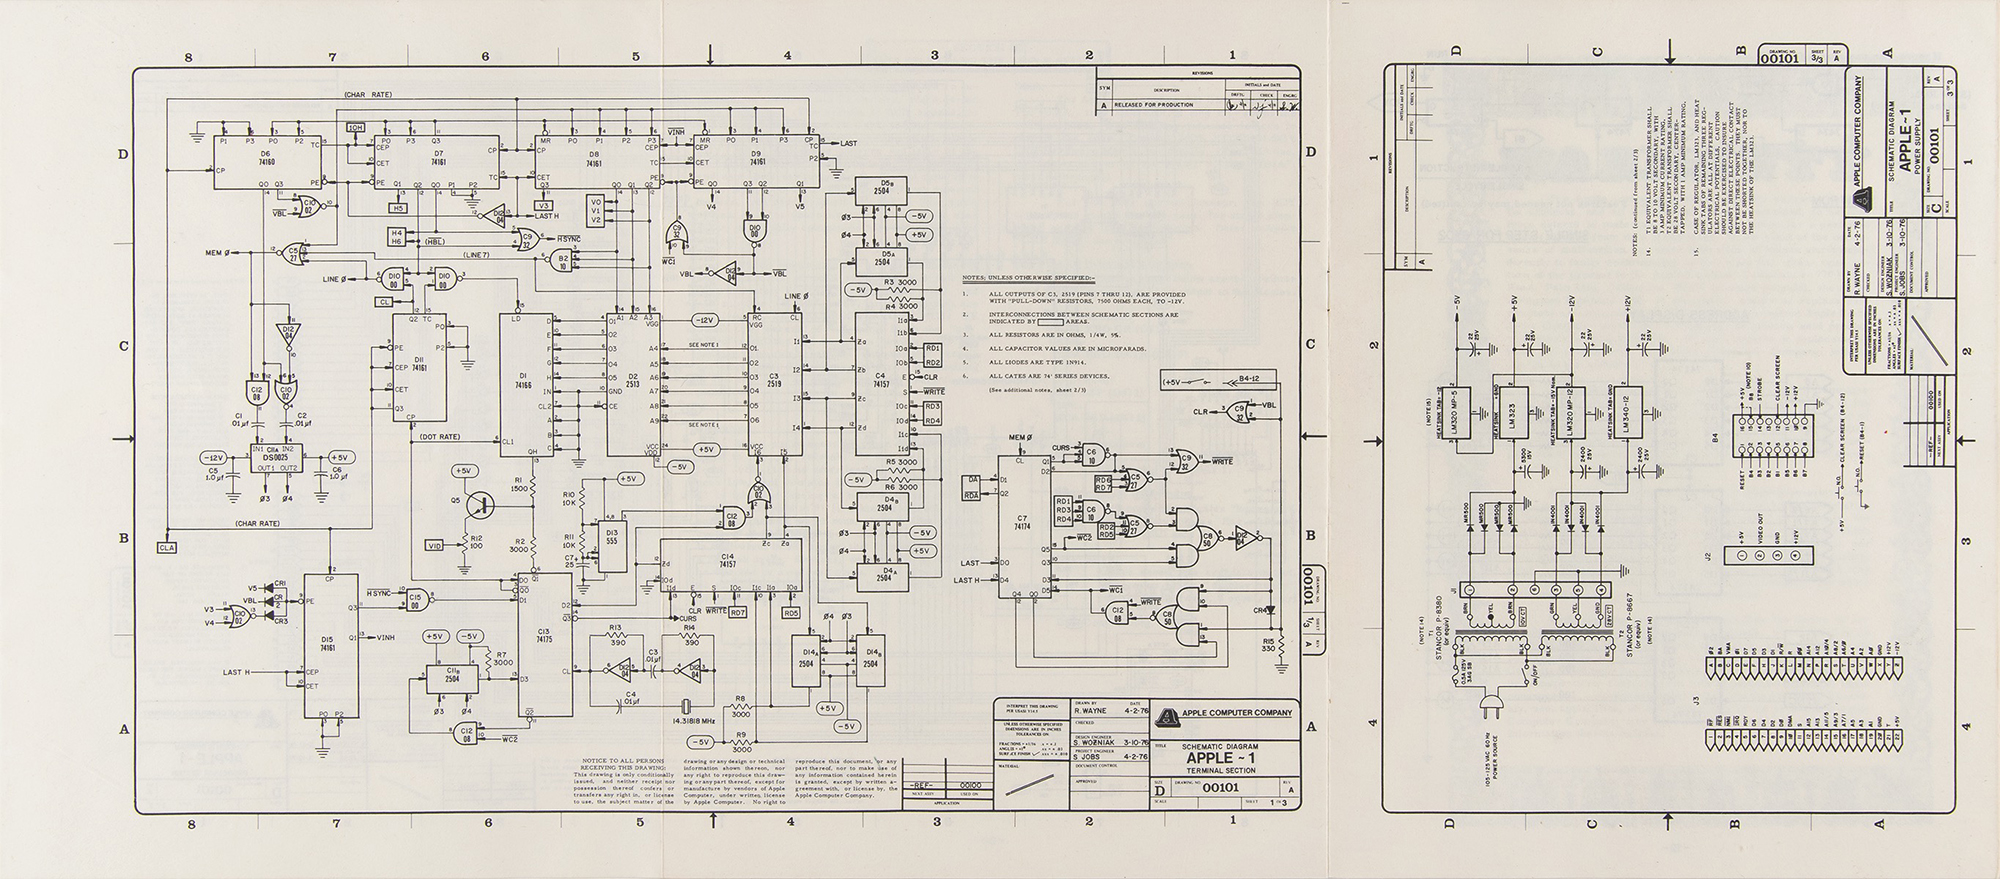 Lot #8025 Apple-1 Computer Operation Manual - Image 8